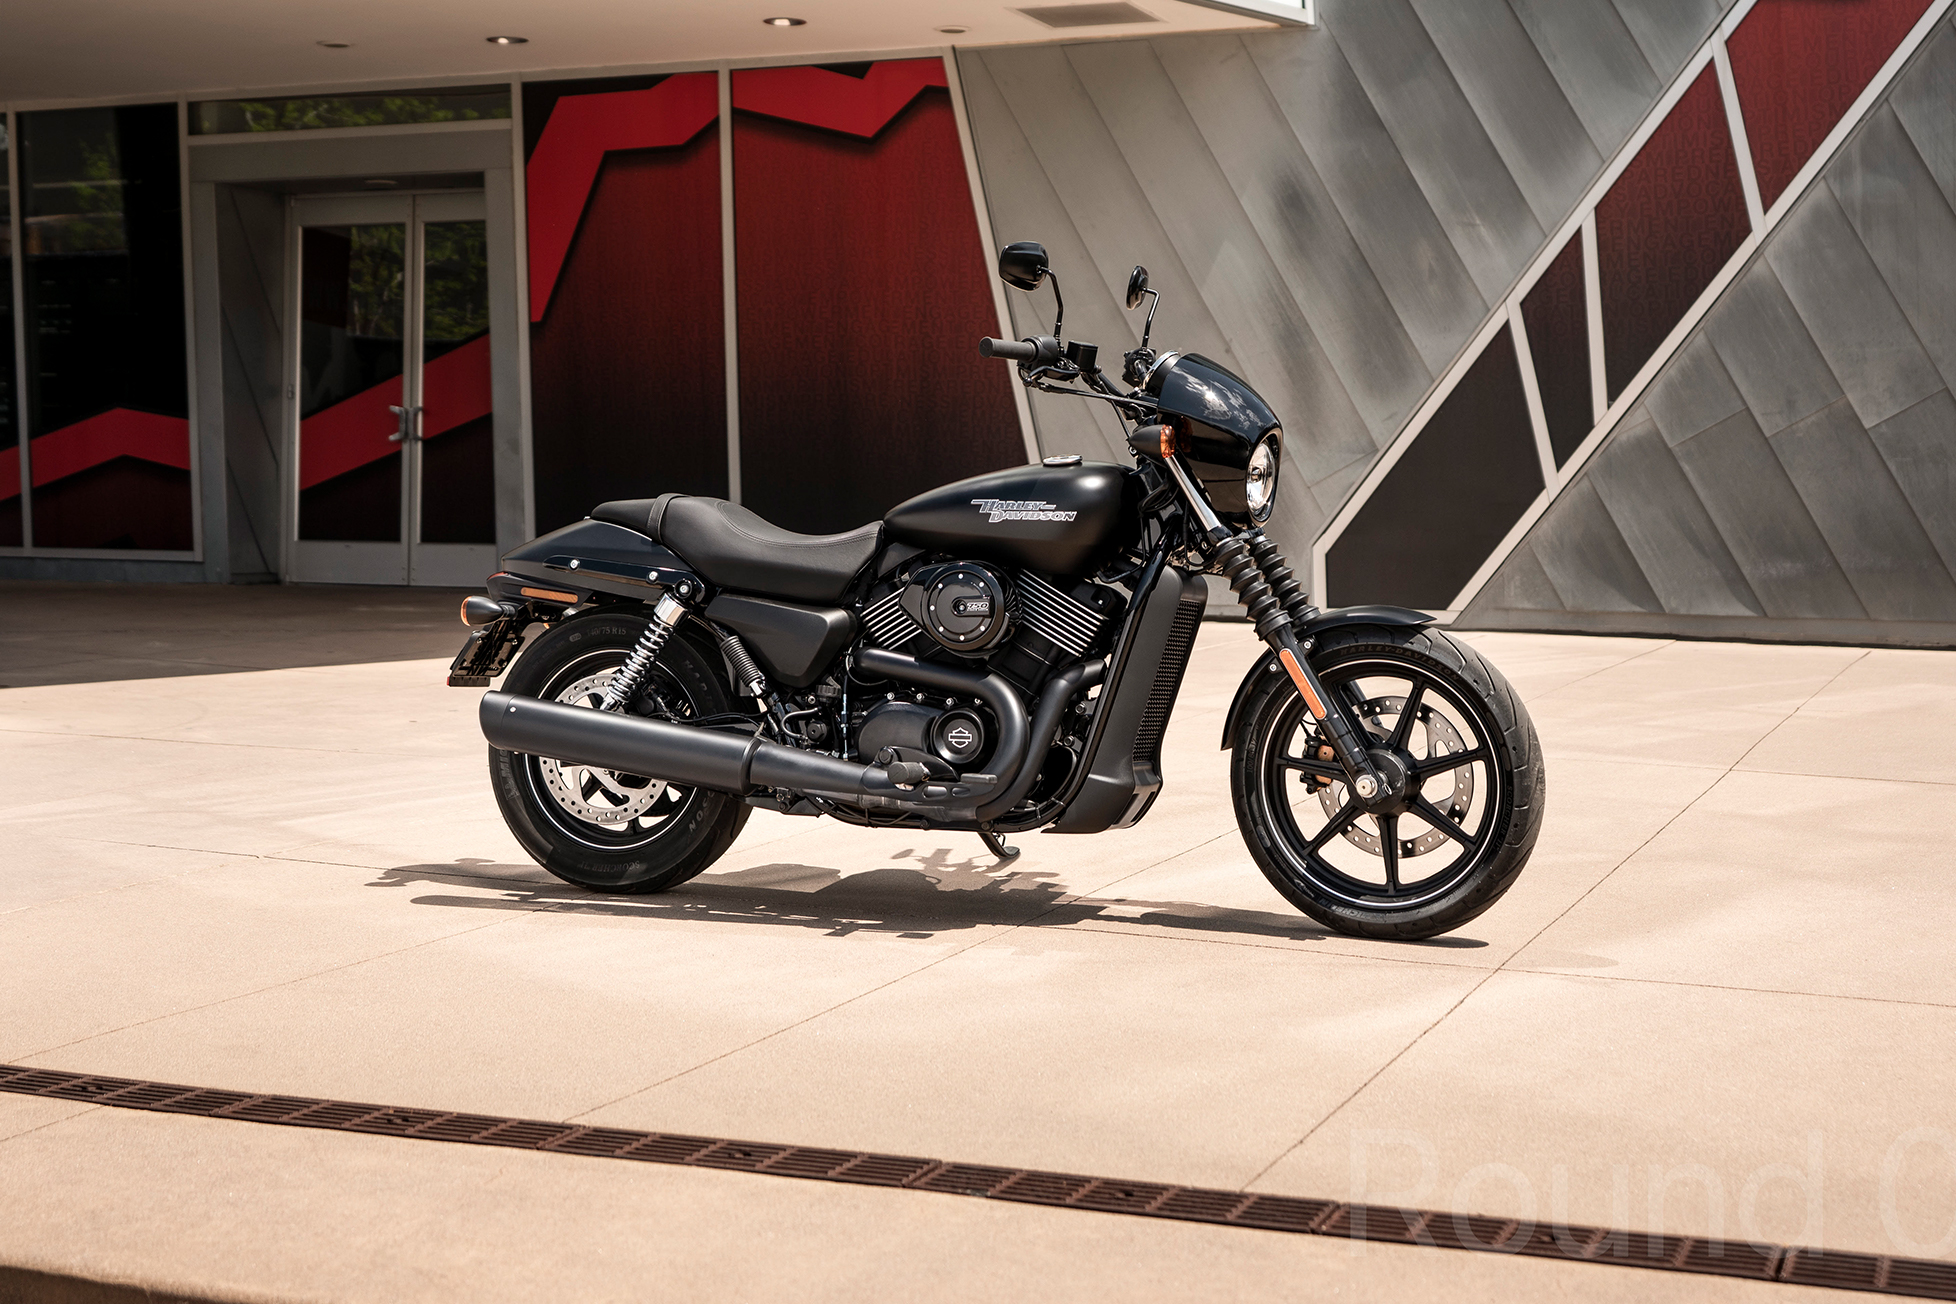  2019 Harley Davidon Street 750 Motorcycle Harley 